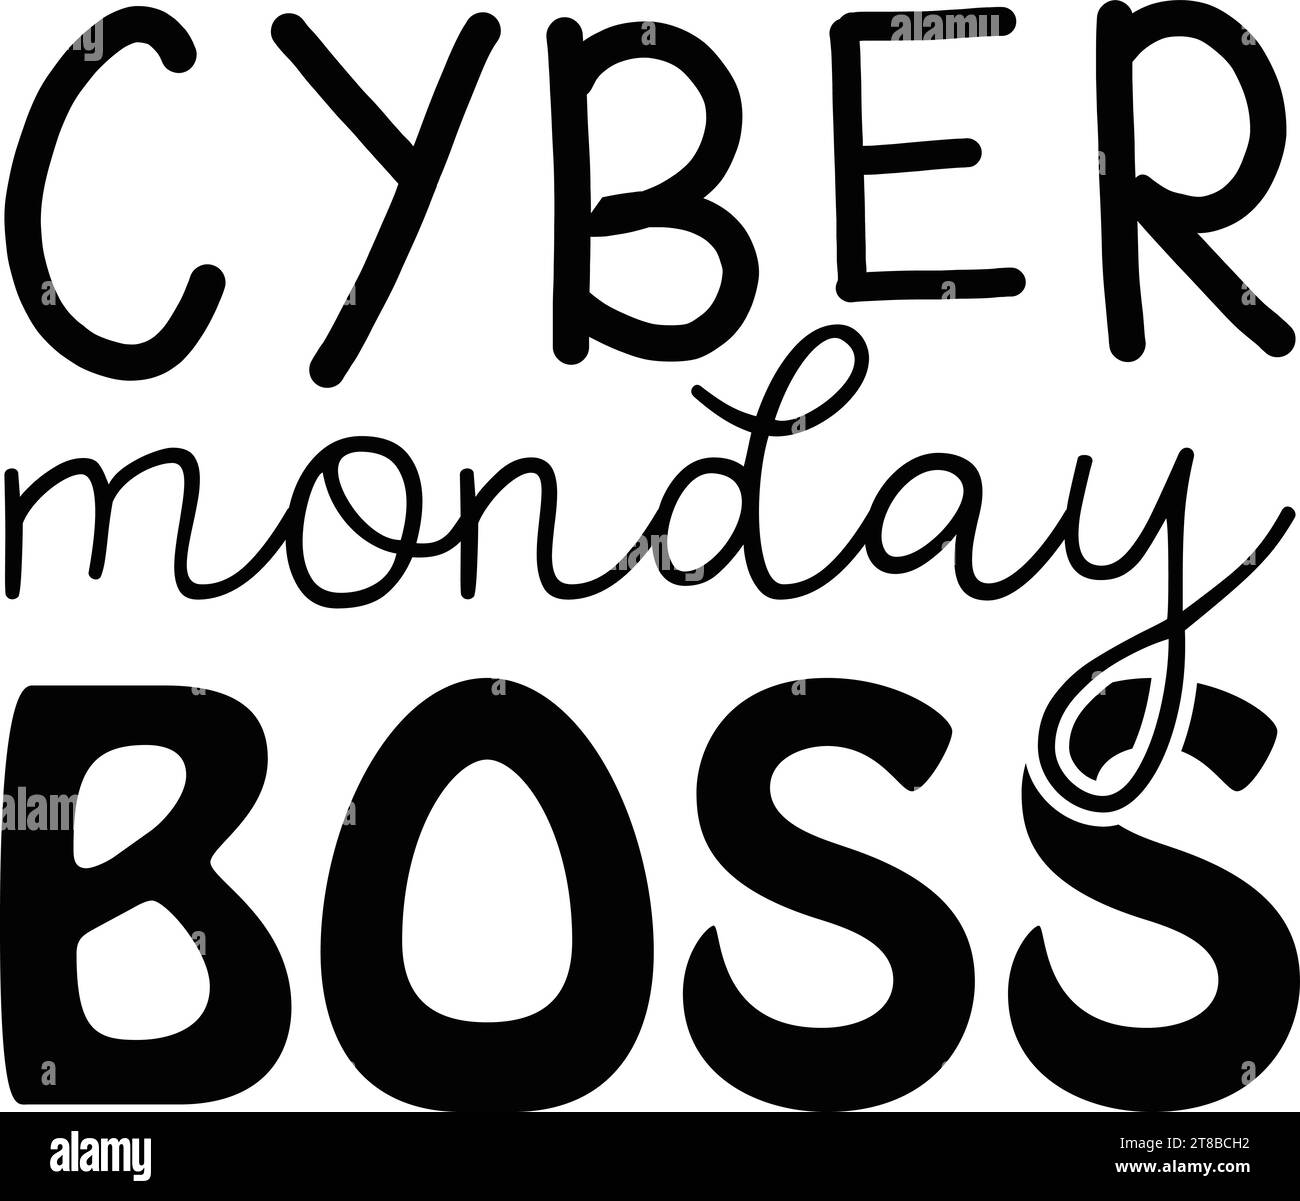 Cyber Monday Boss Stock Vector